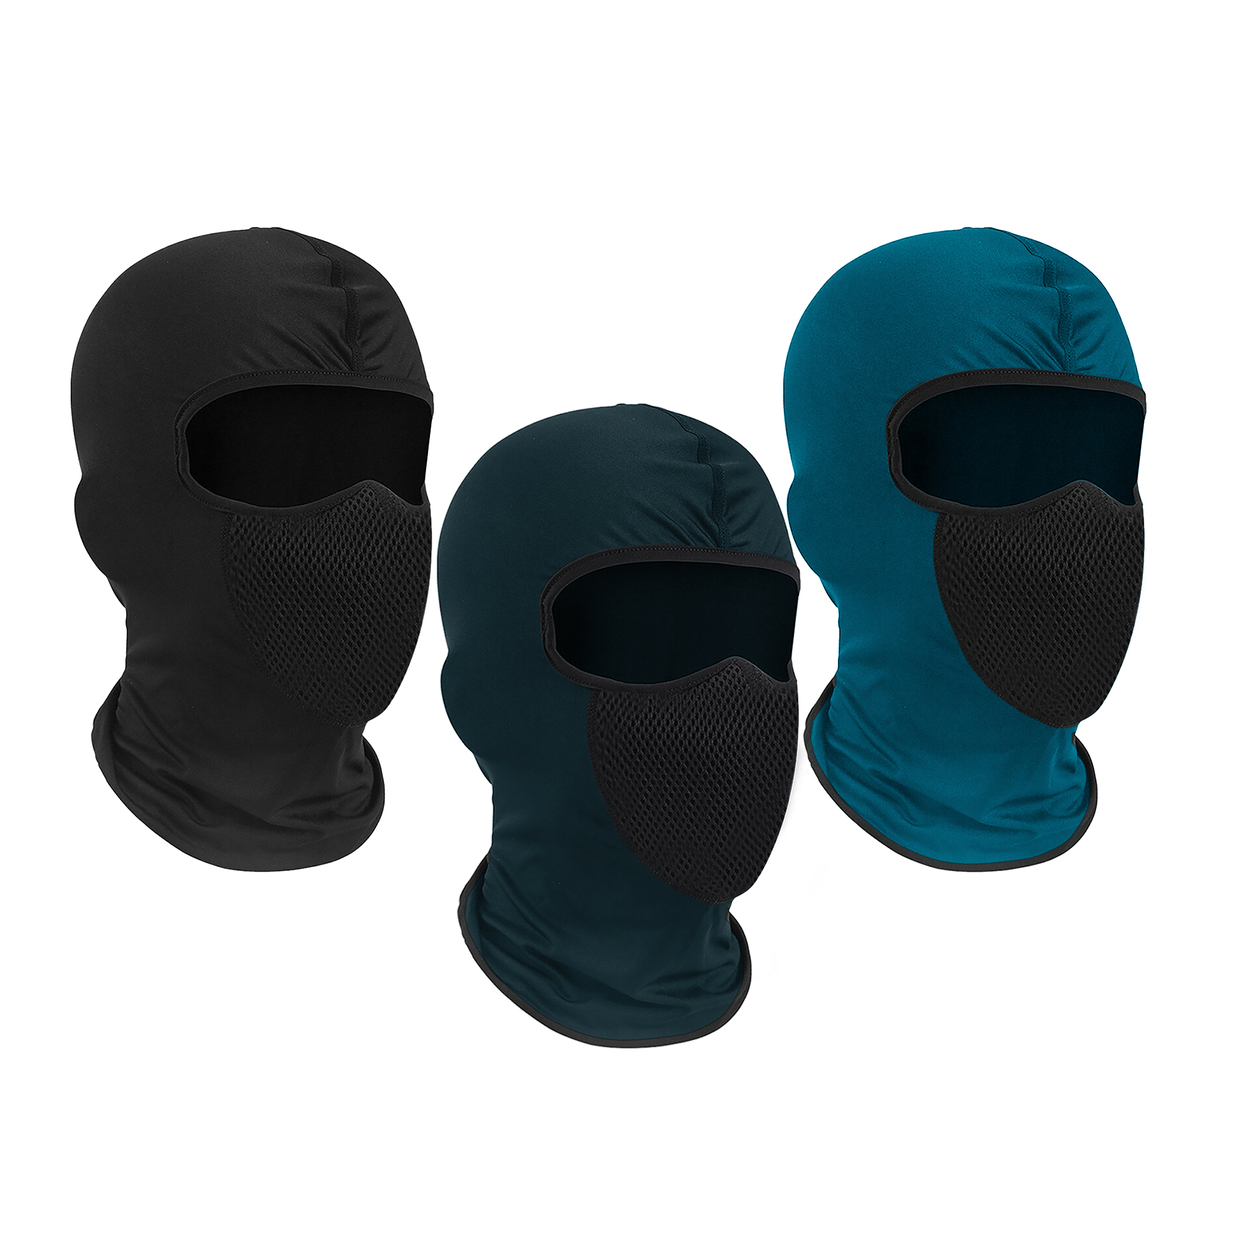 Men's Warm Winter Windproof Breathable Cozy Thermal Balaclava Winter Ski Full Face Mask - Black